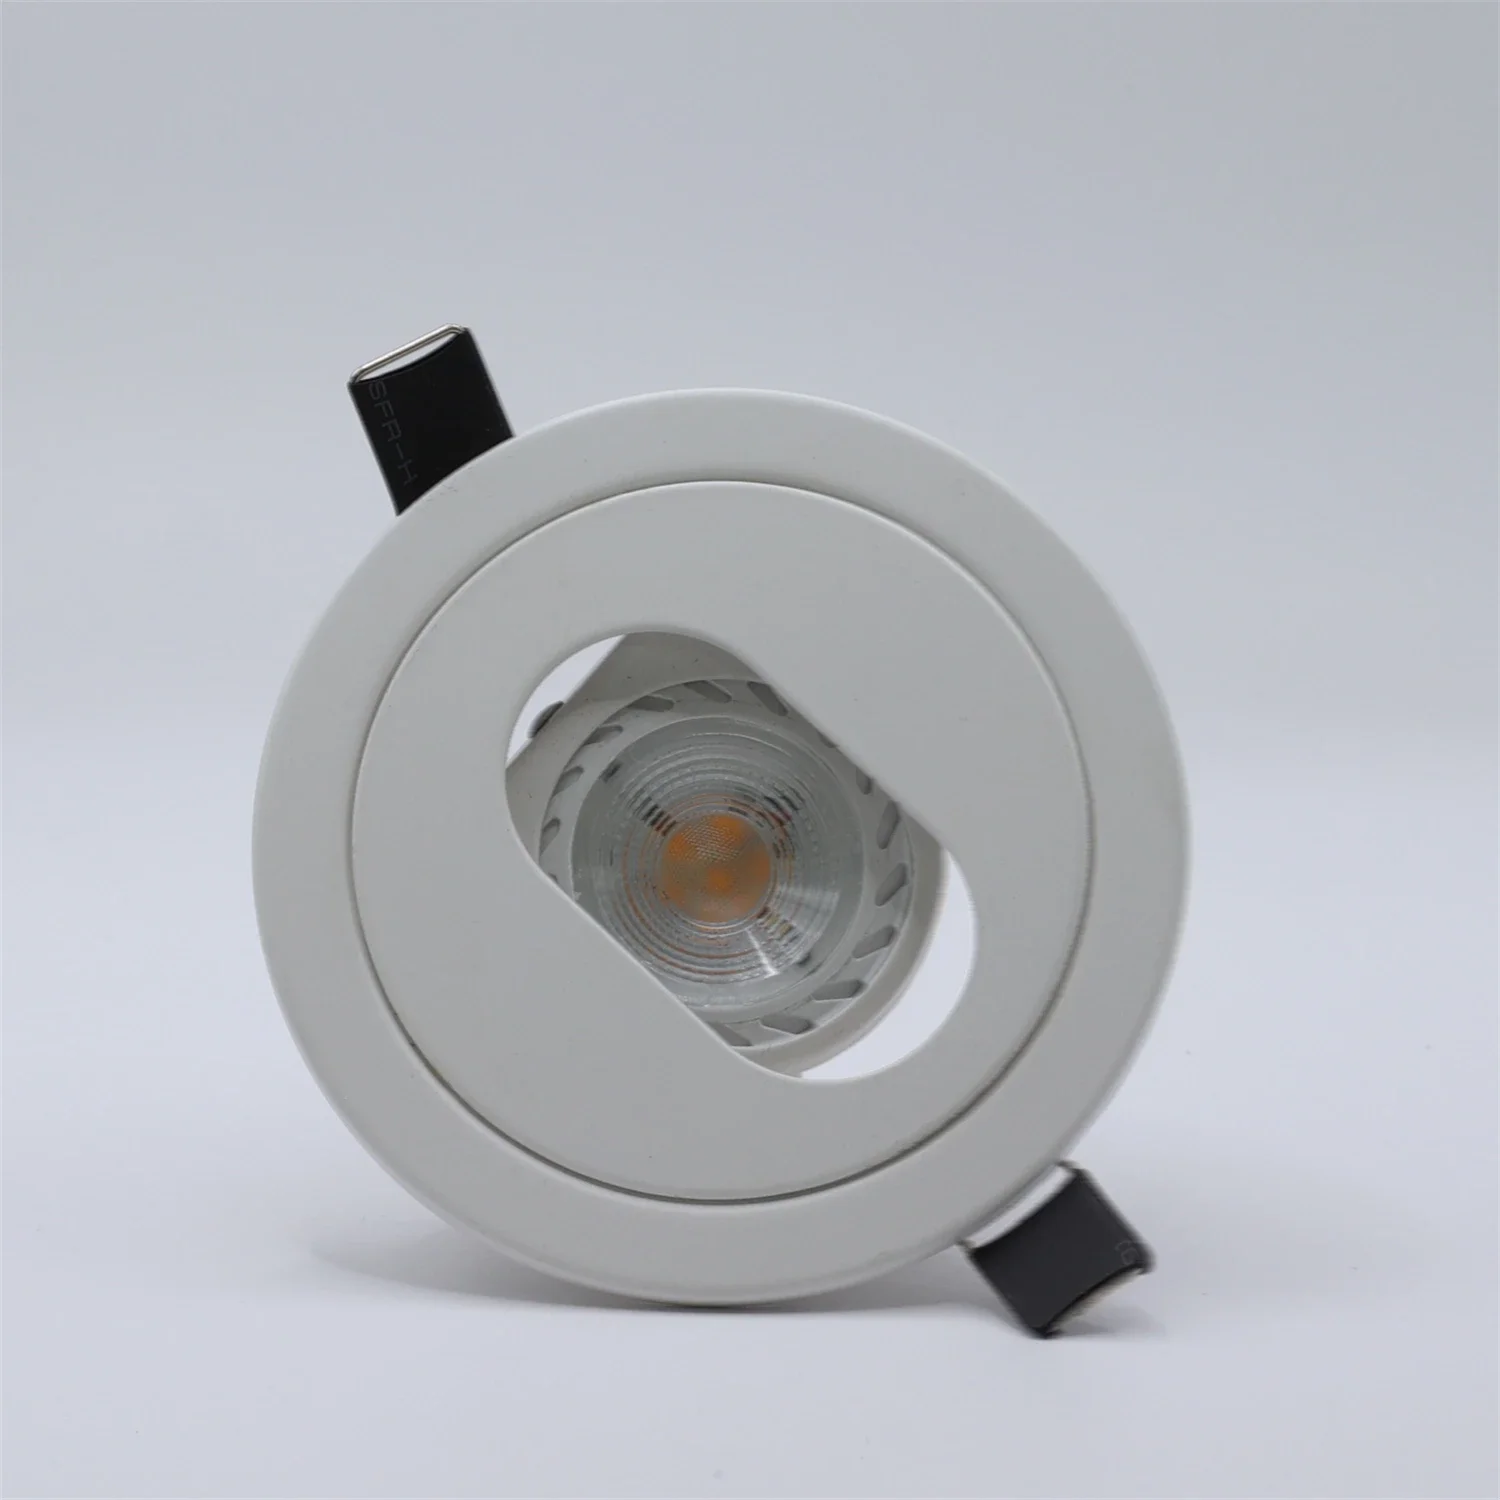 RECESSED DOWNLIGHT DECORATION LAMP MR16 FIXTURE LED EYEBALL SPOTLIGHT WITH GU10 6W BULB FITTING FRAME